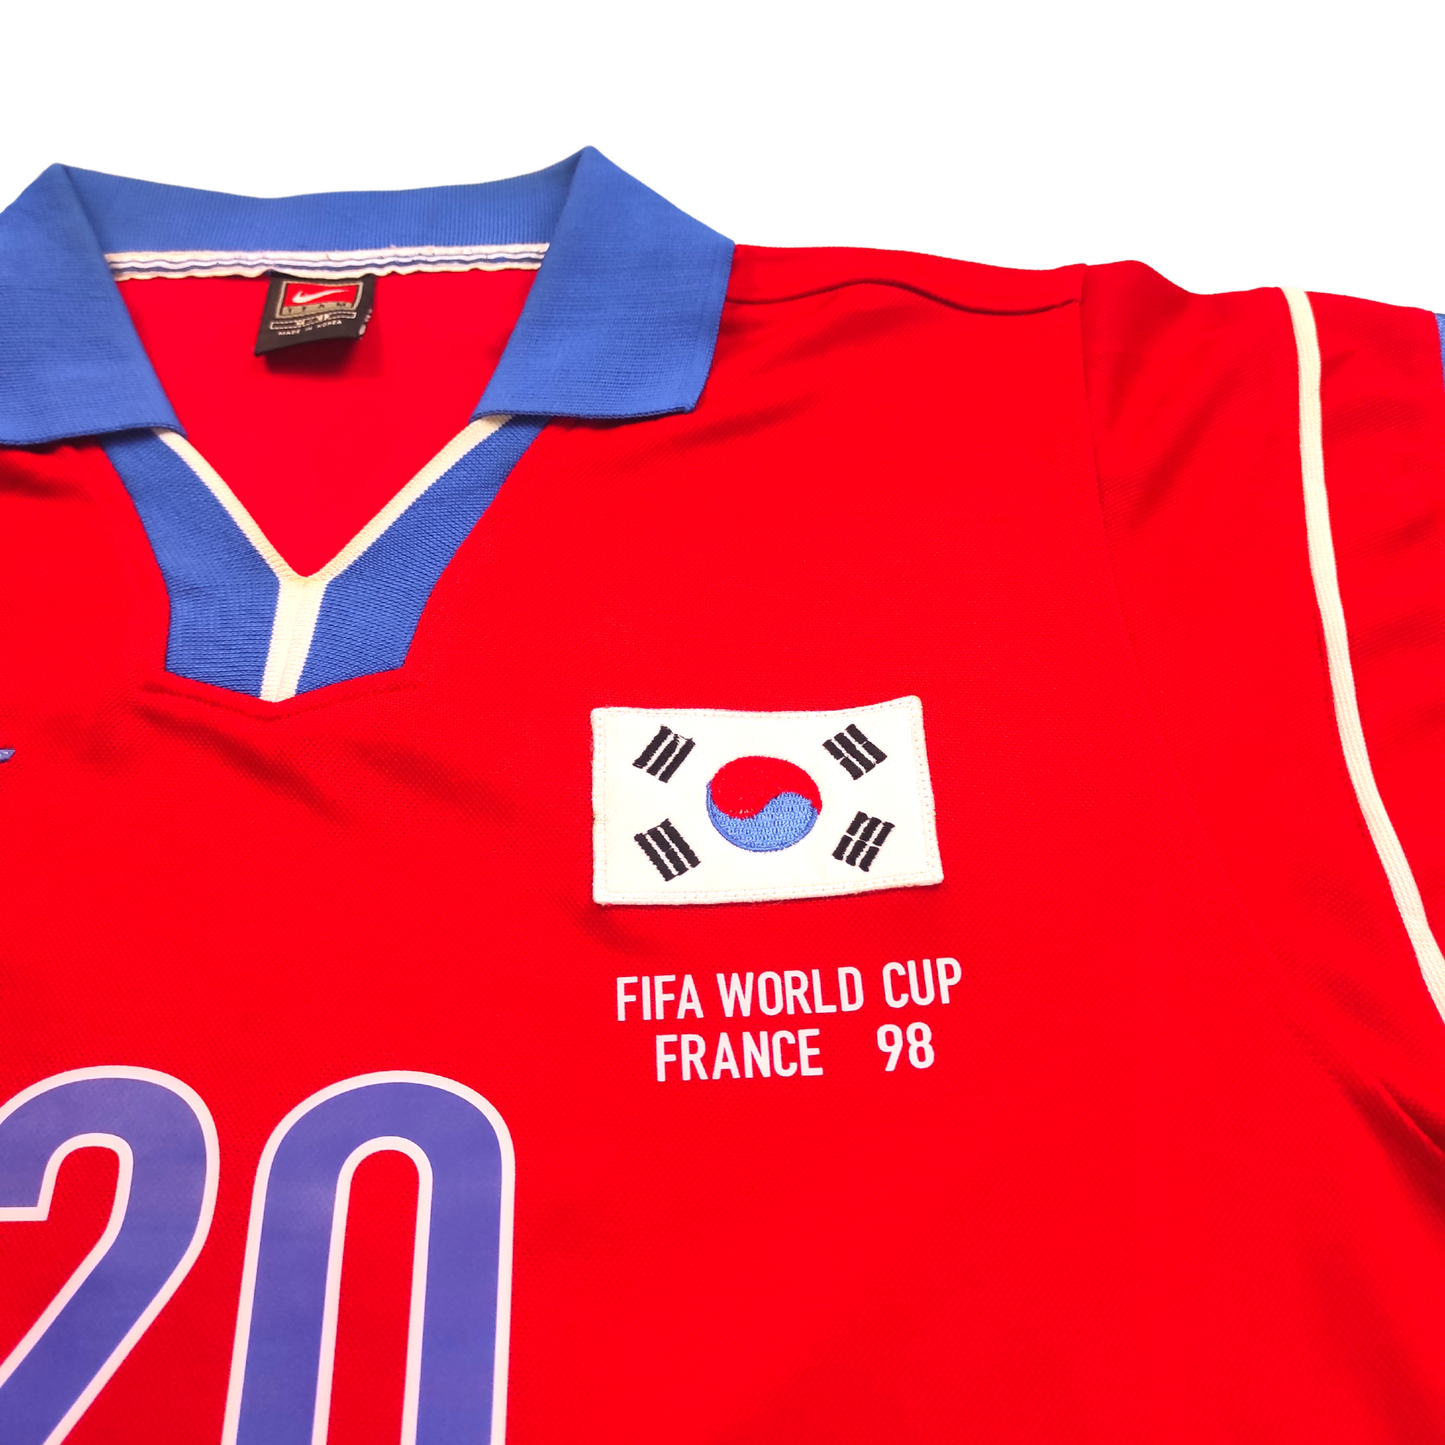 South Korea Home Shirt w/Shorts 1998-2000 M B Hong (M)